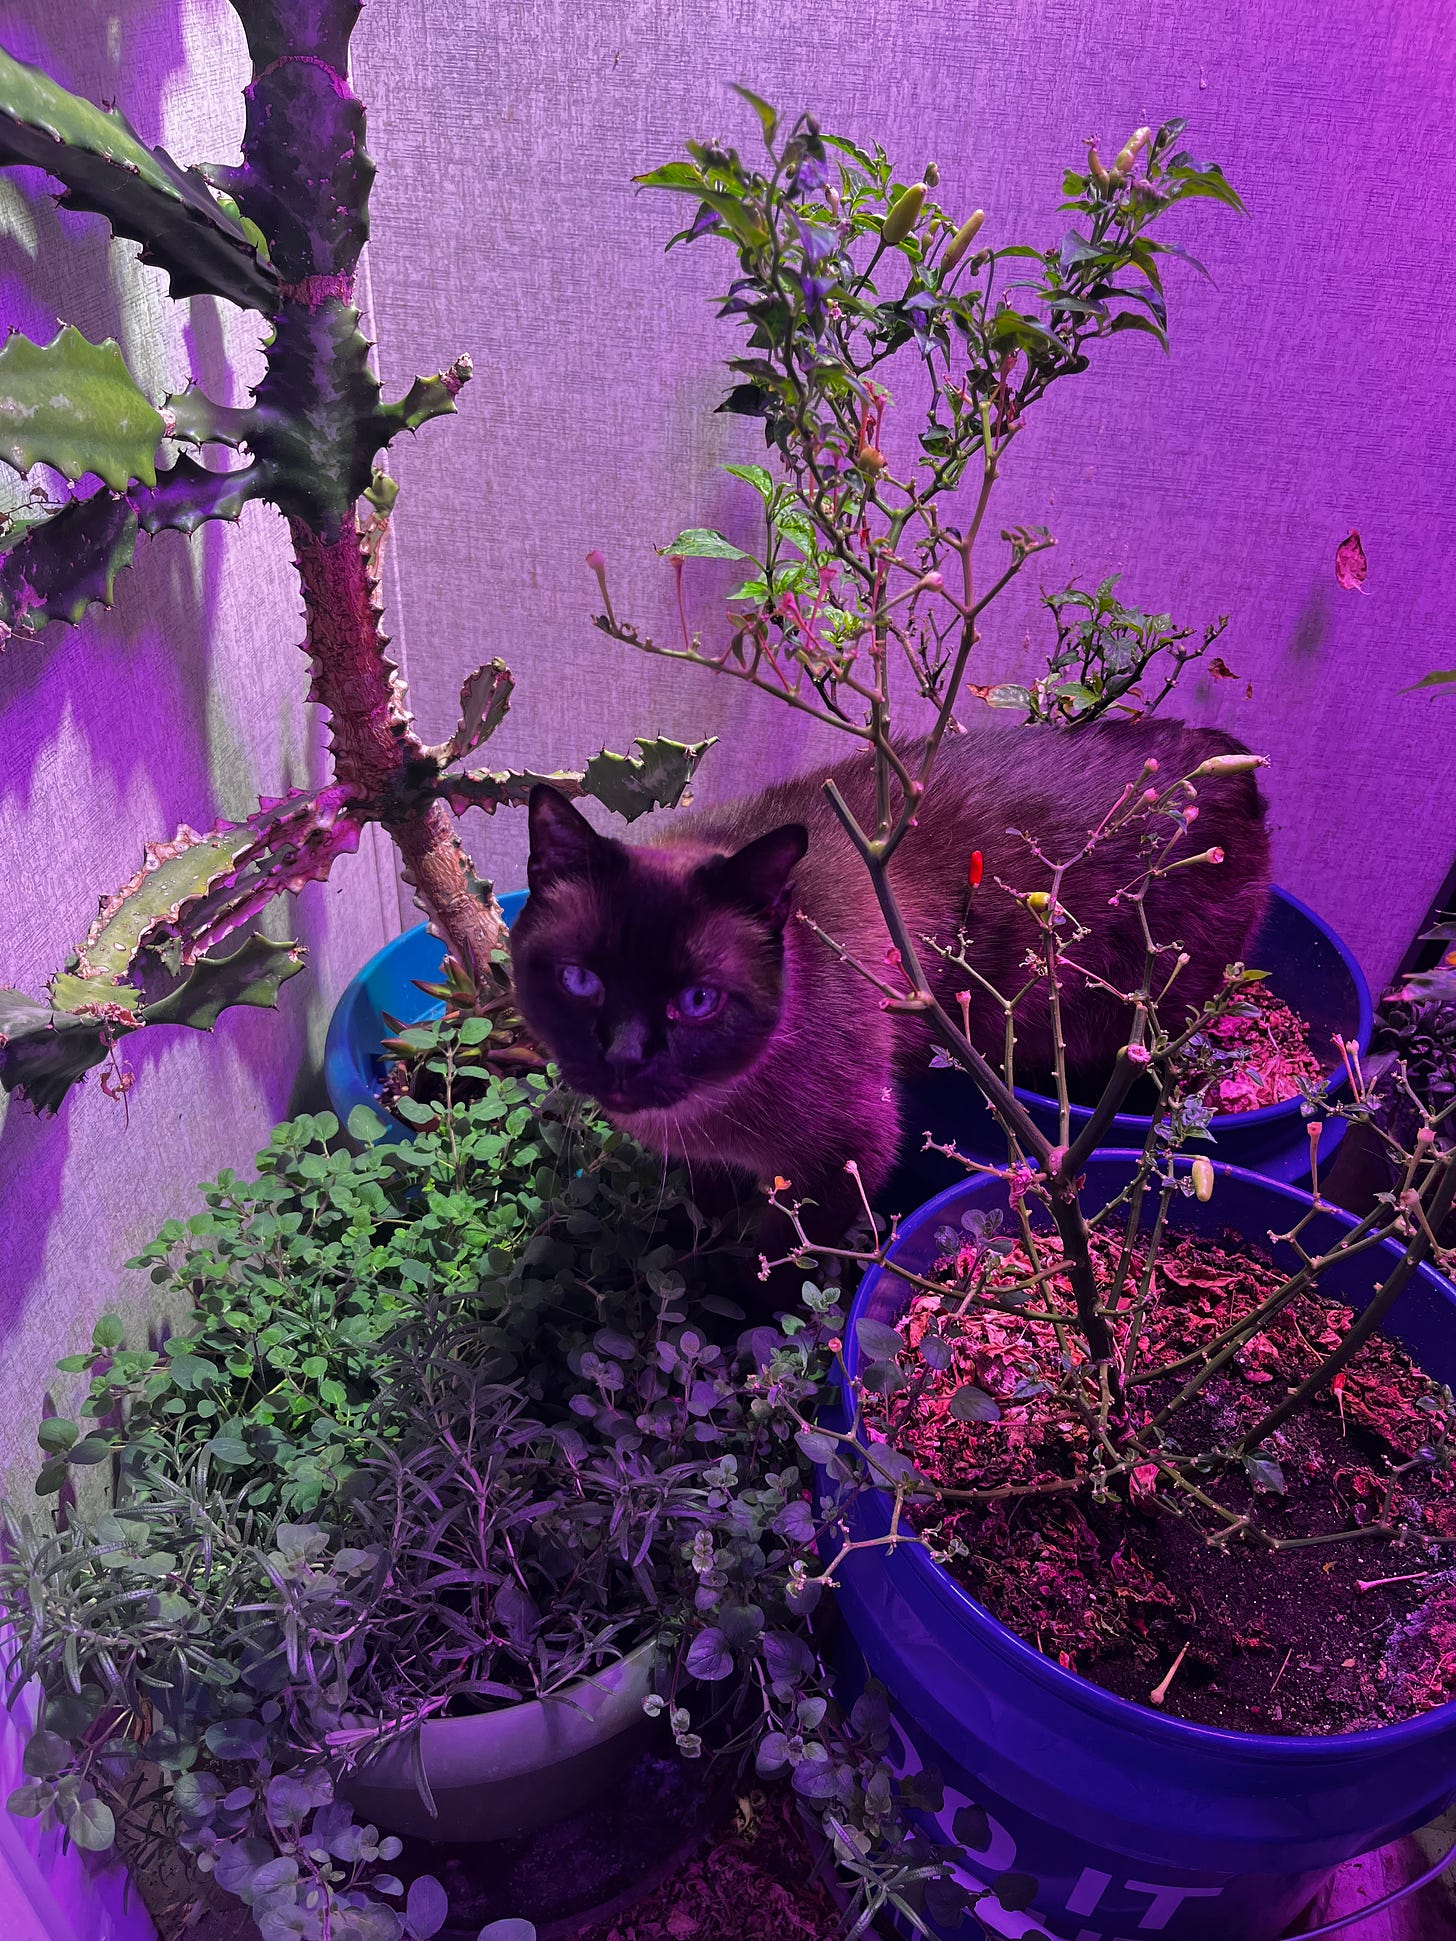 A Siamese cat in a closet full of plants